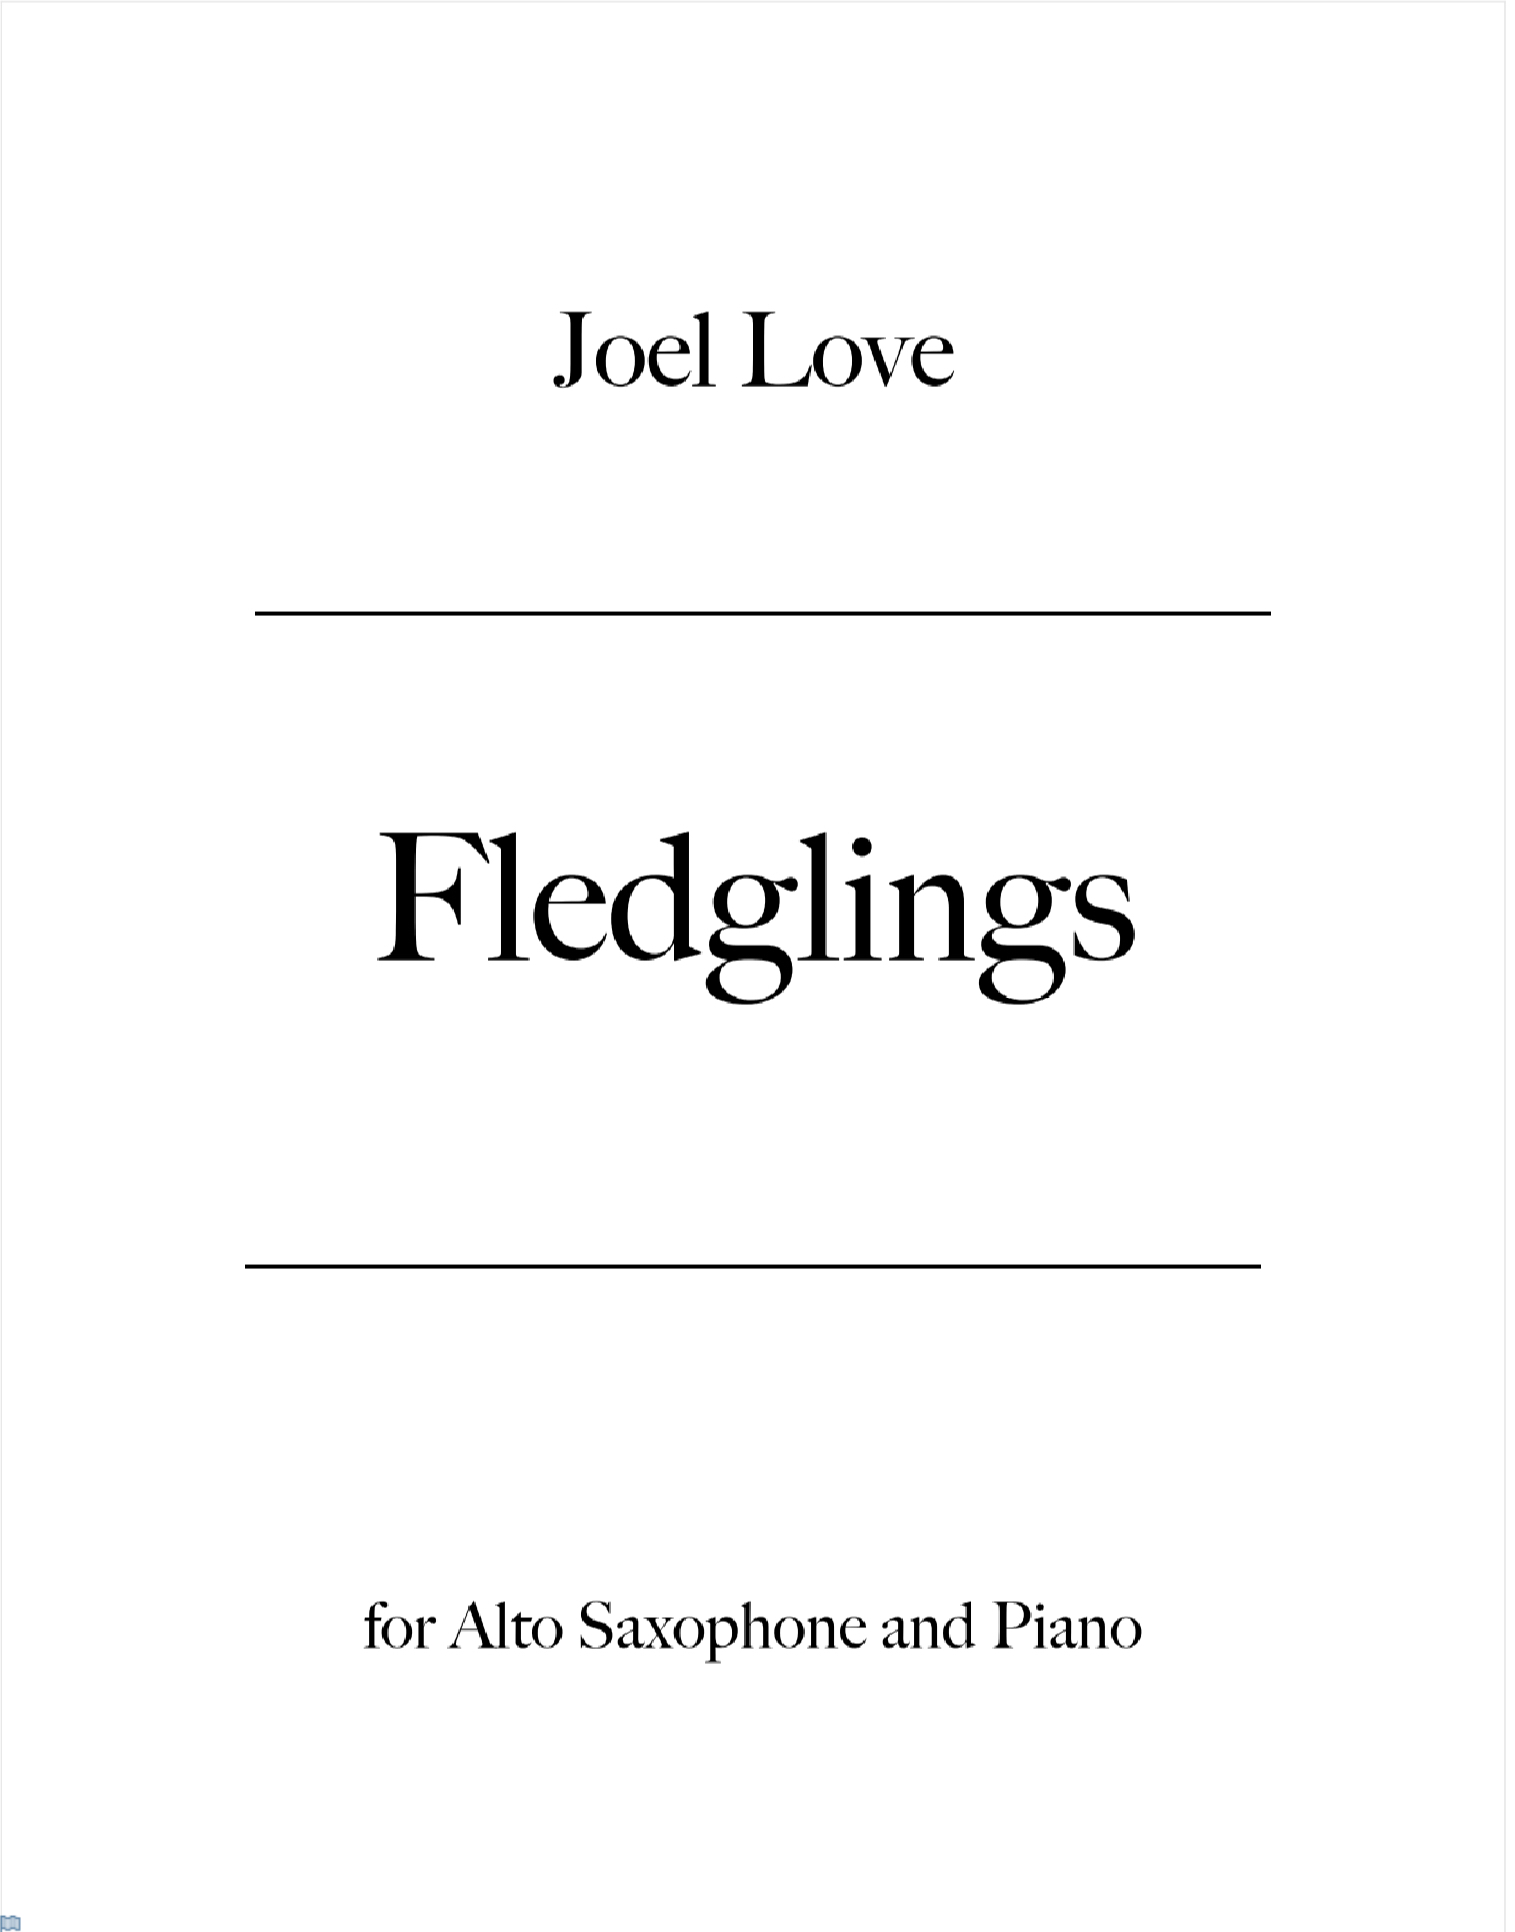 Fledglings by Joel Love